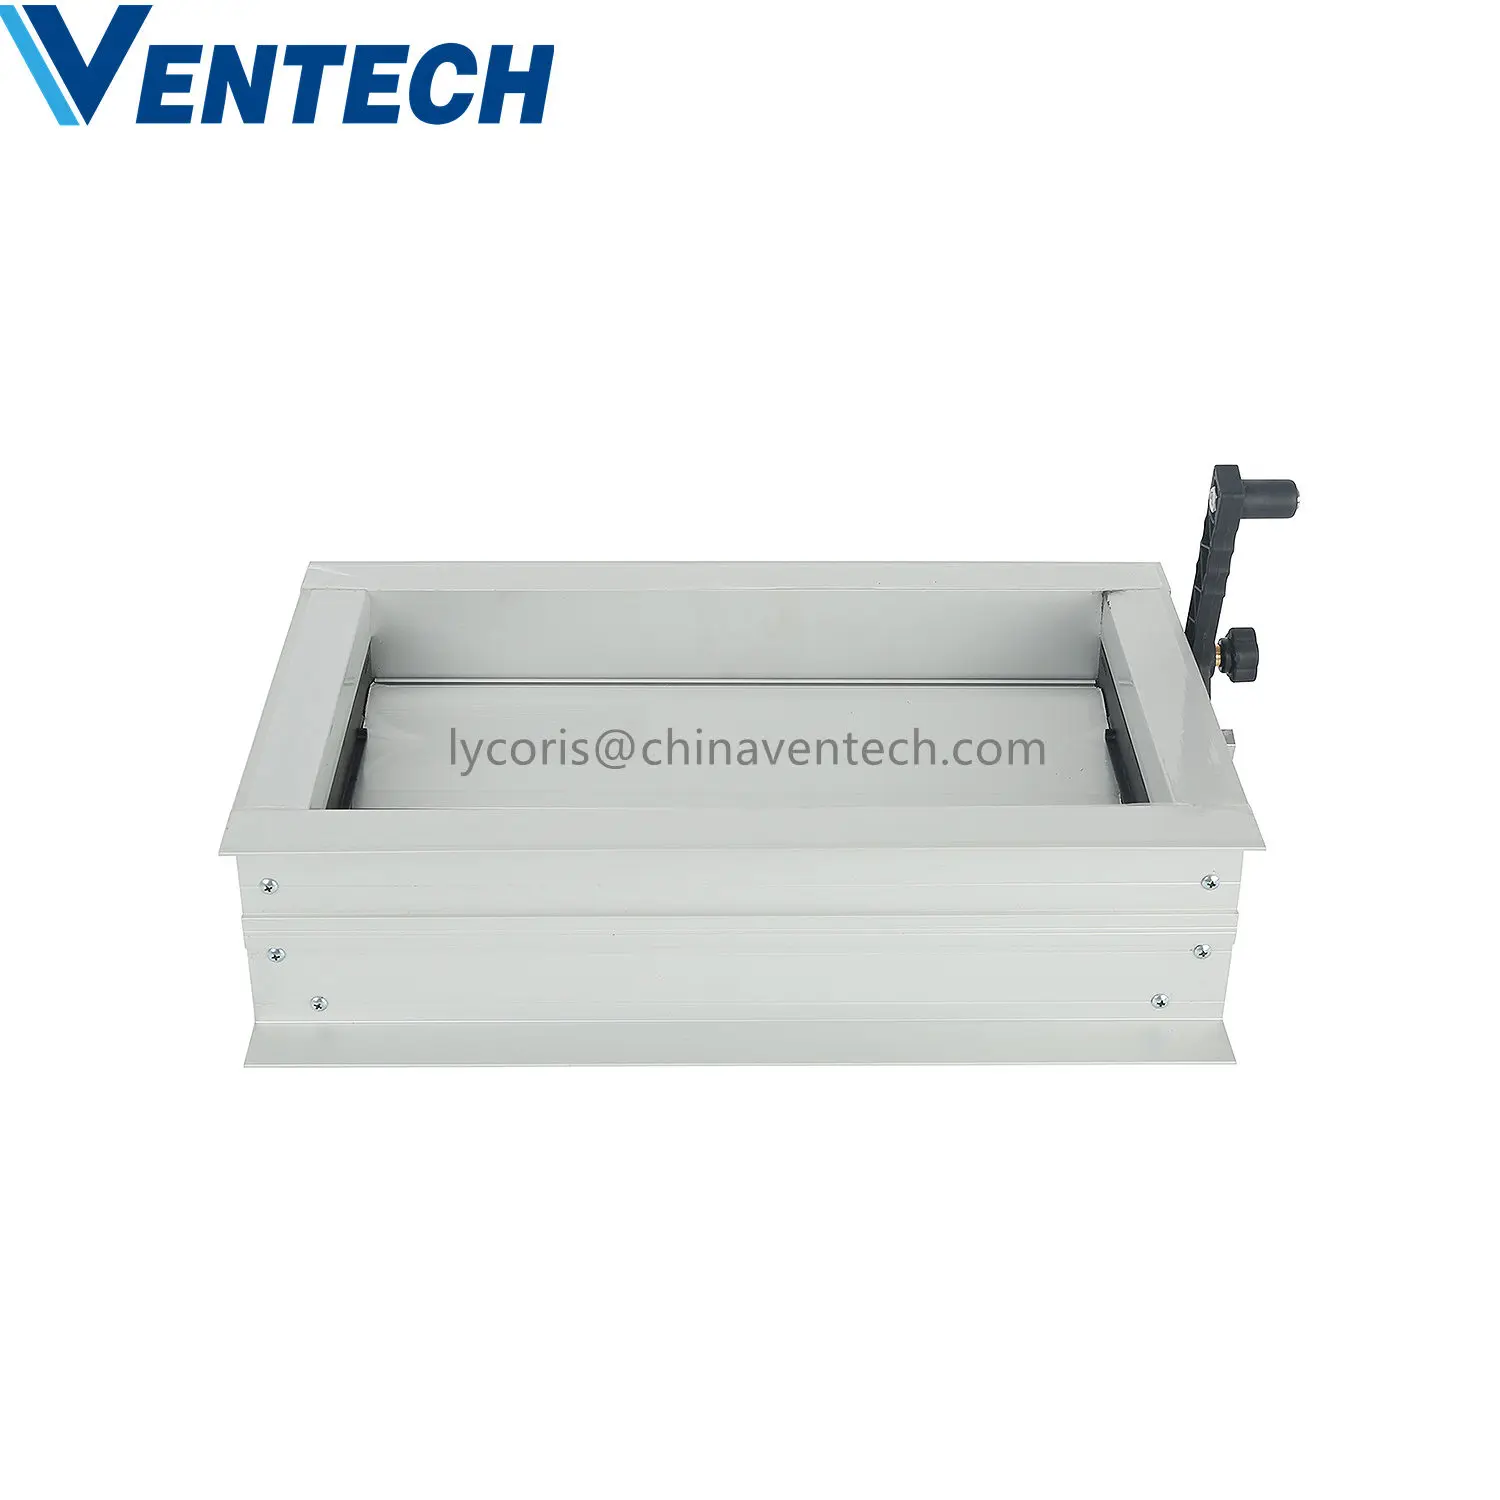 VCD Damper Ventilation Manual Volume Control Aluminum Air Damper Supply Air Ceiling Diffuser HVAC system Air Duct